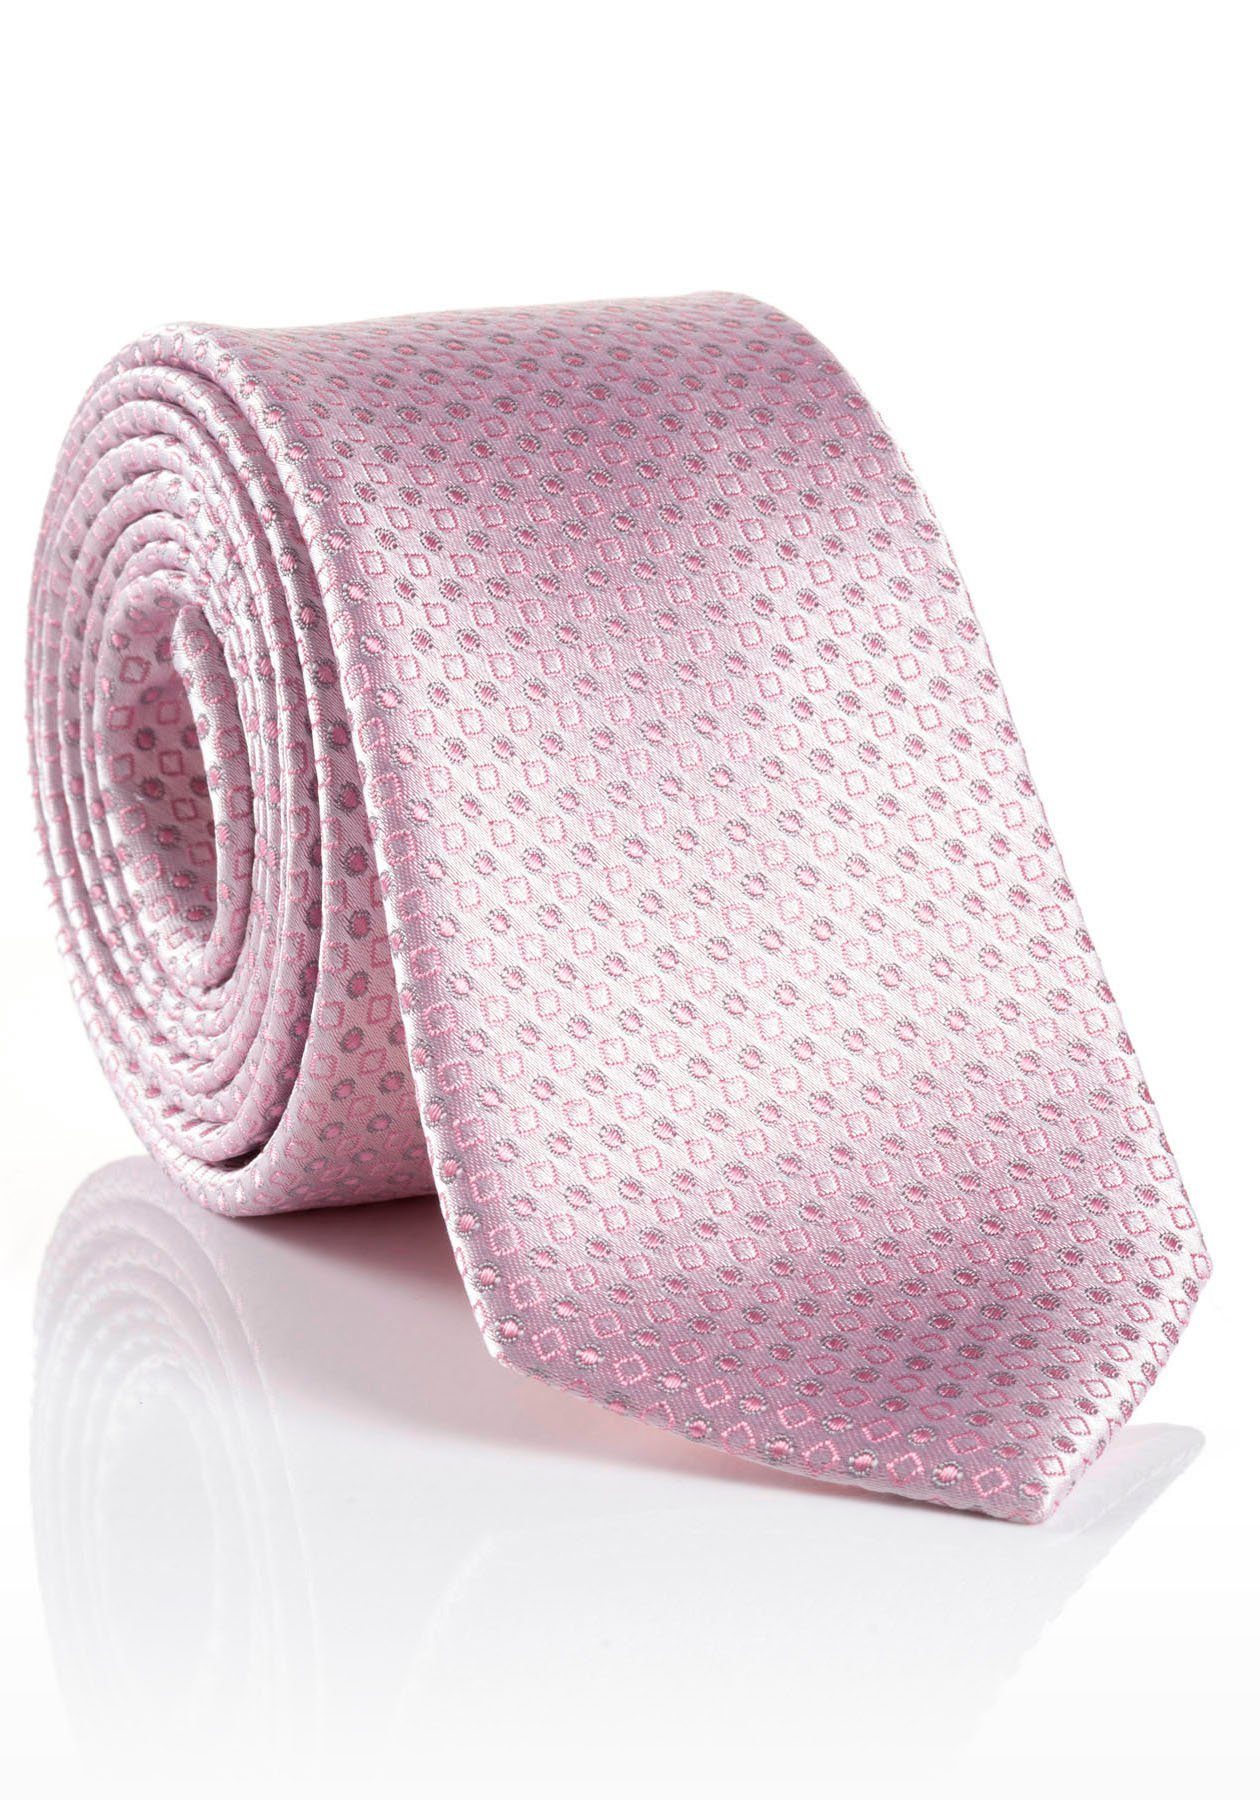 MONTI Krawatte LEANO Krawatte aus Minimal-Design,Pastellfarben Seide, reiner